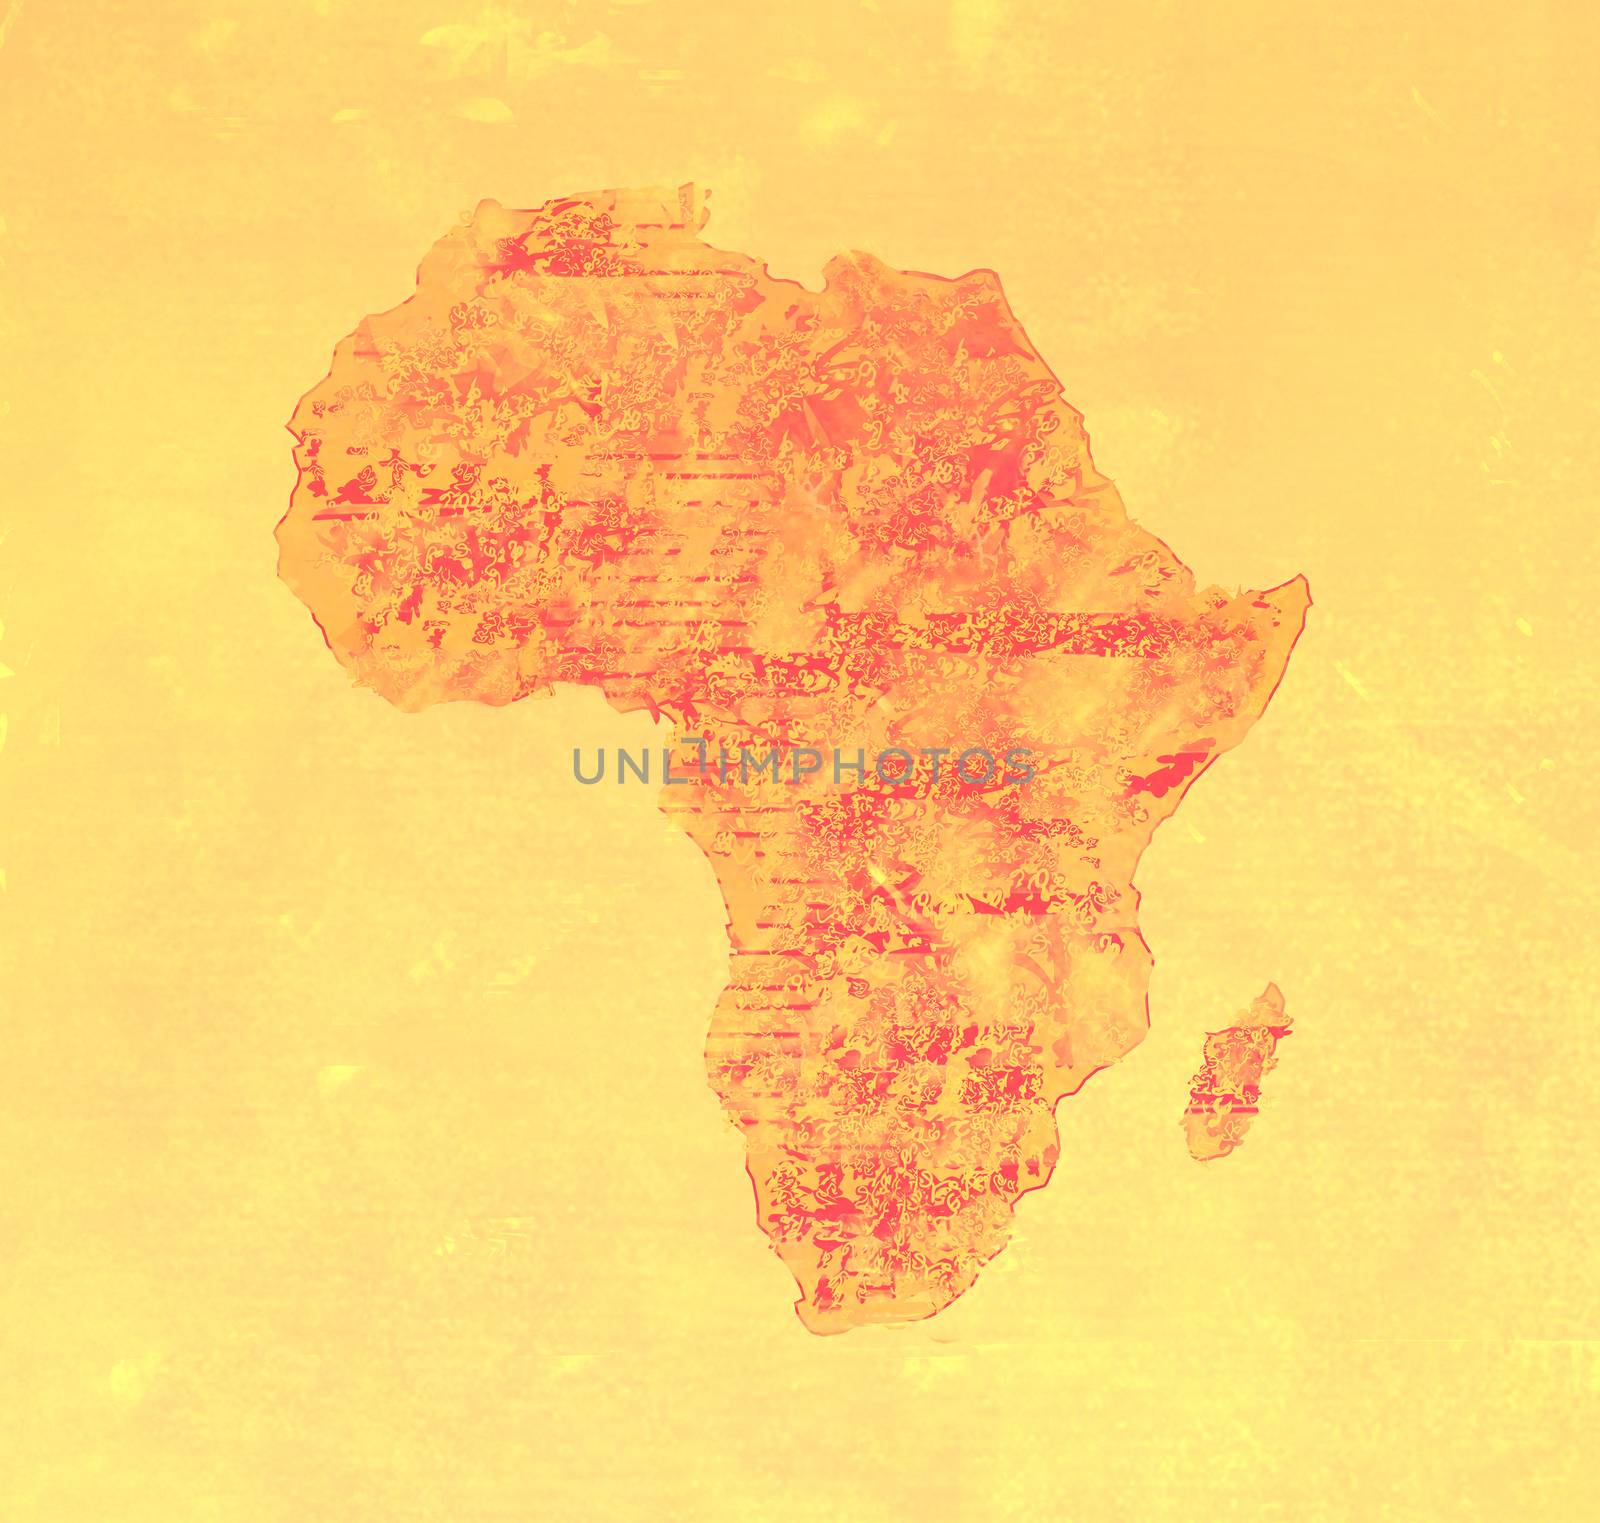 grunge brown Map of Africa